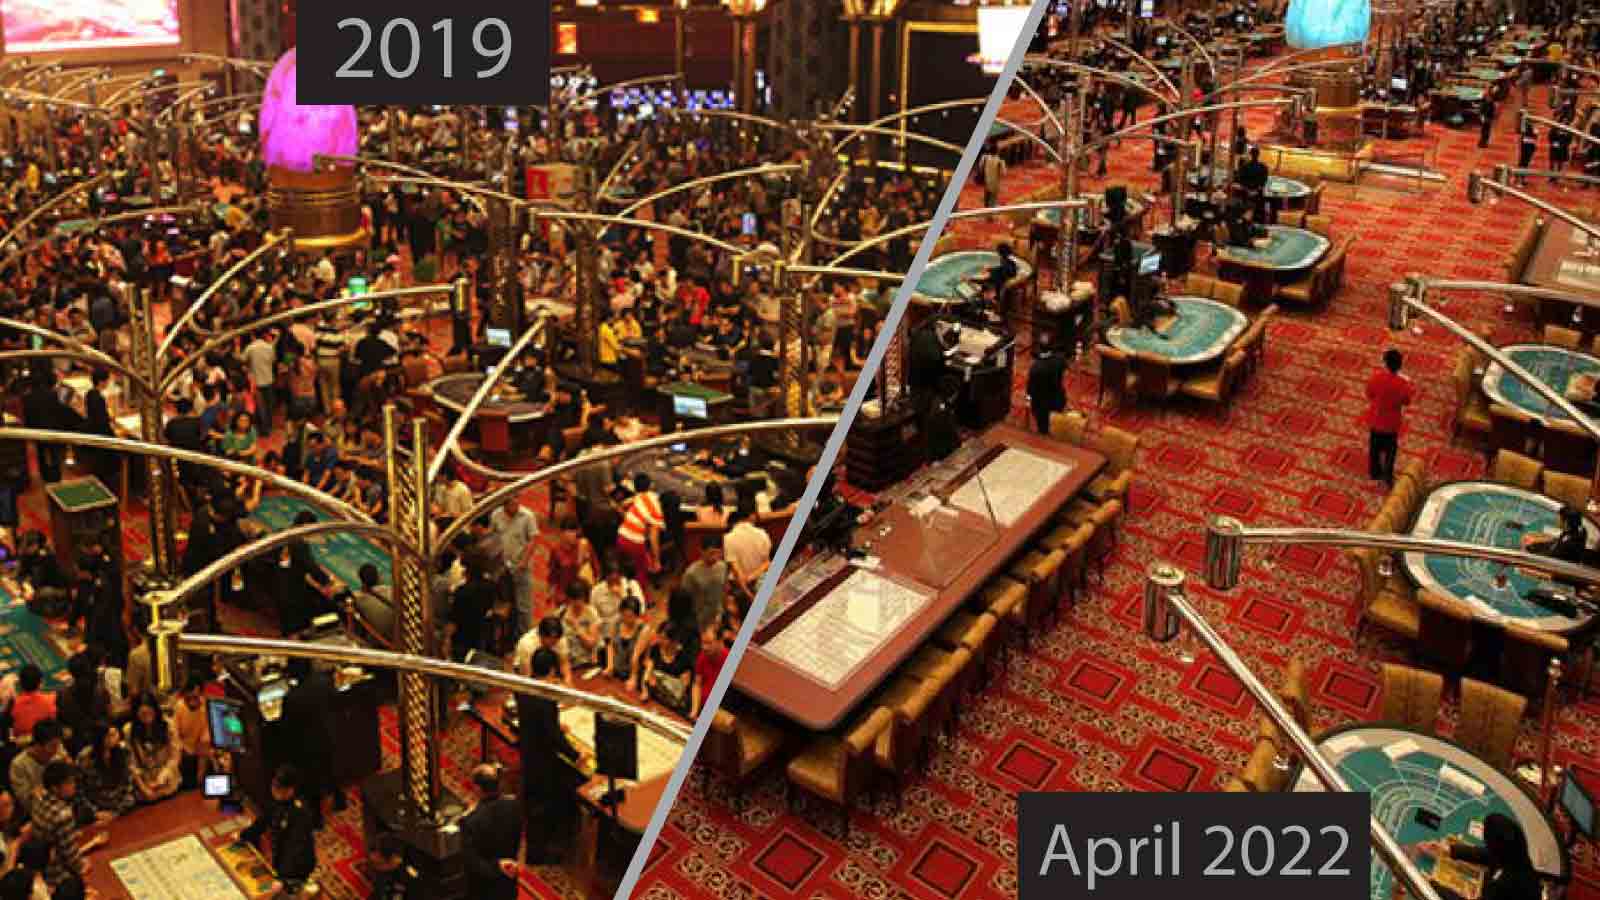 Macau gambling revenues face an unprecedented reduction in April